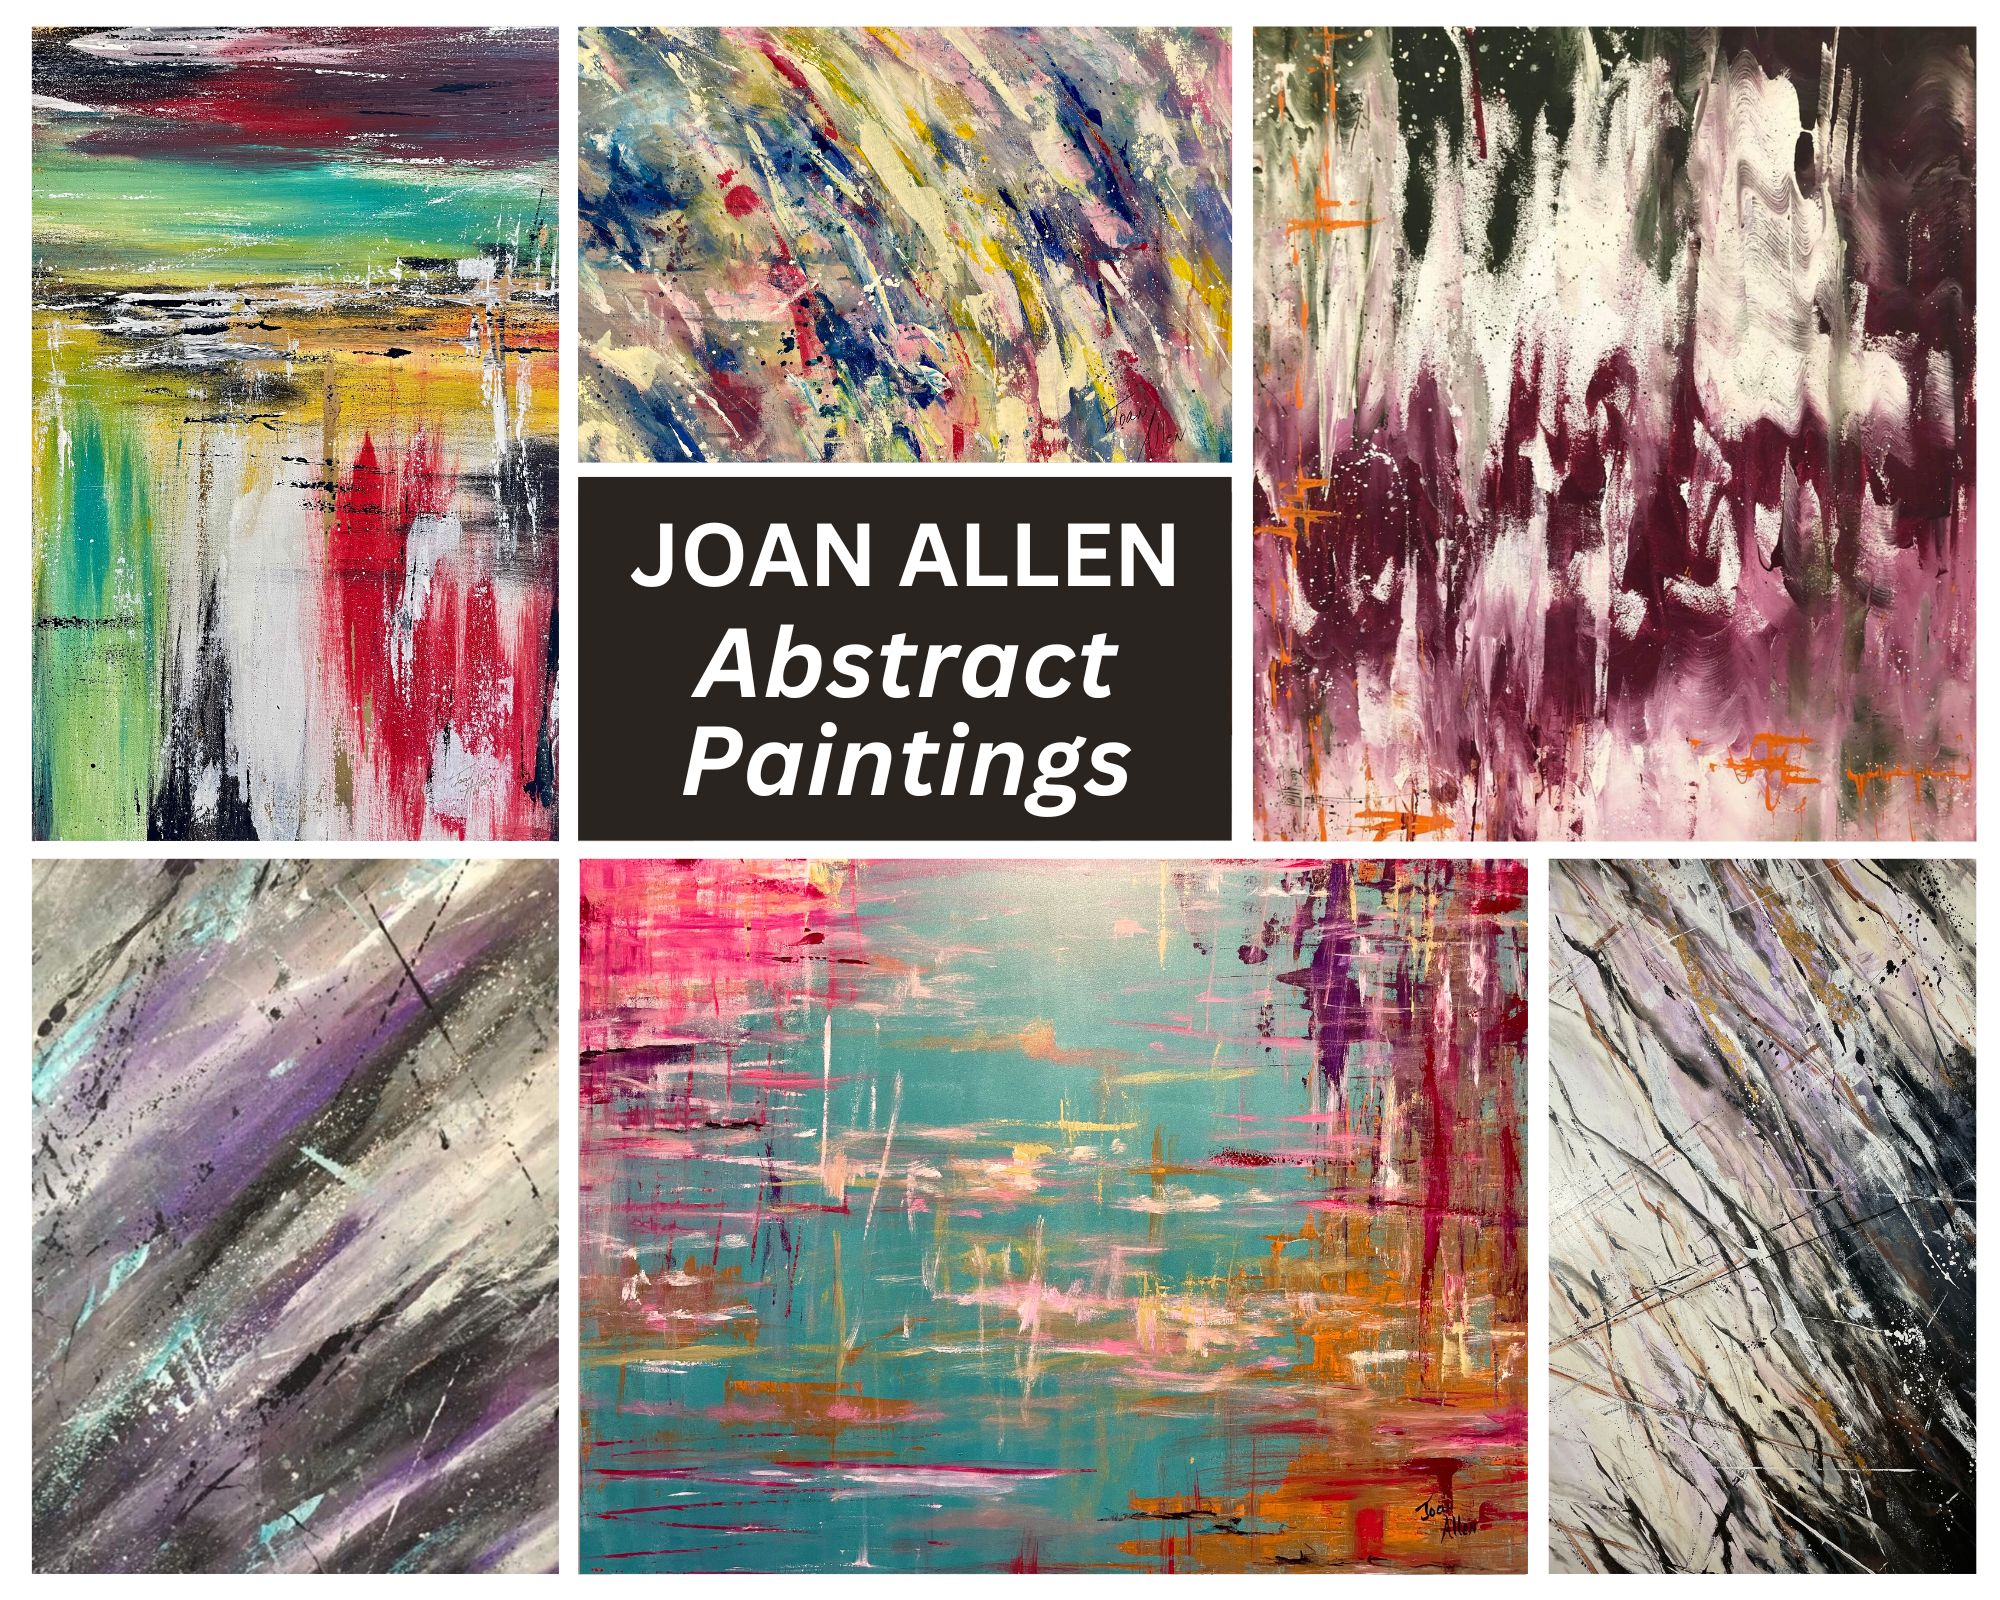 Joan Allen's Abstract Paintings